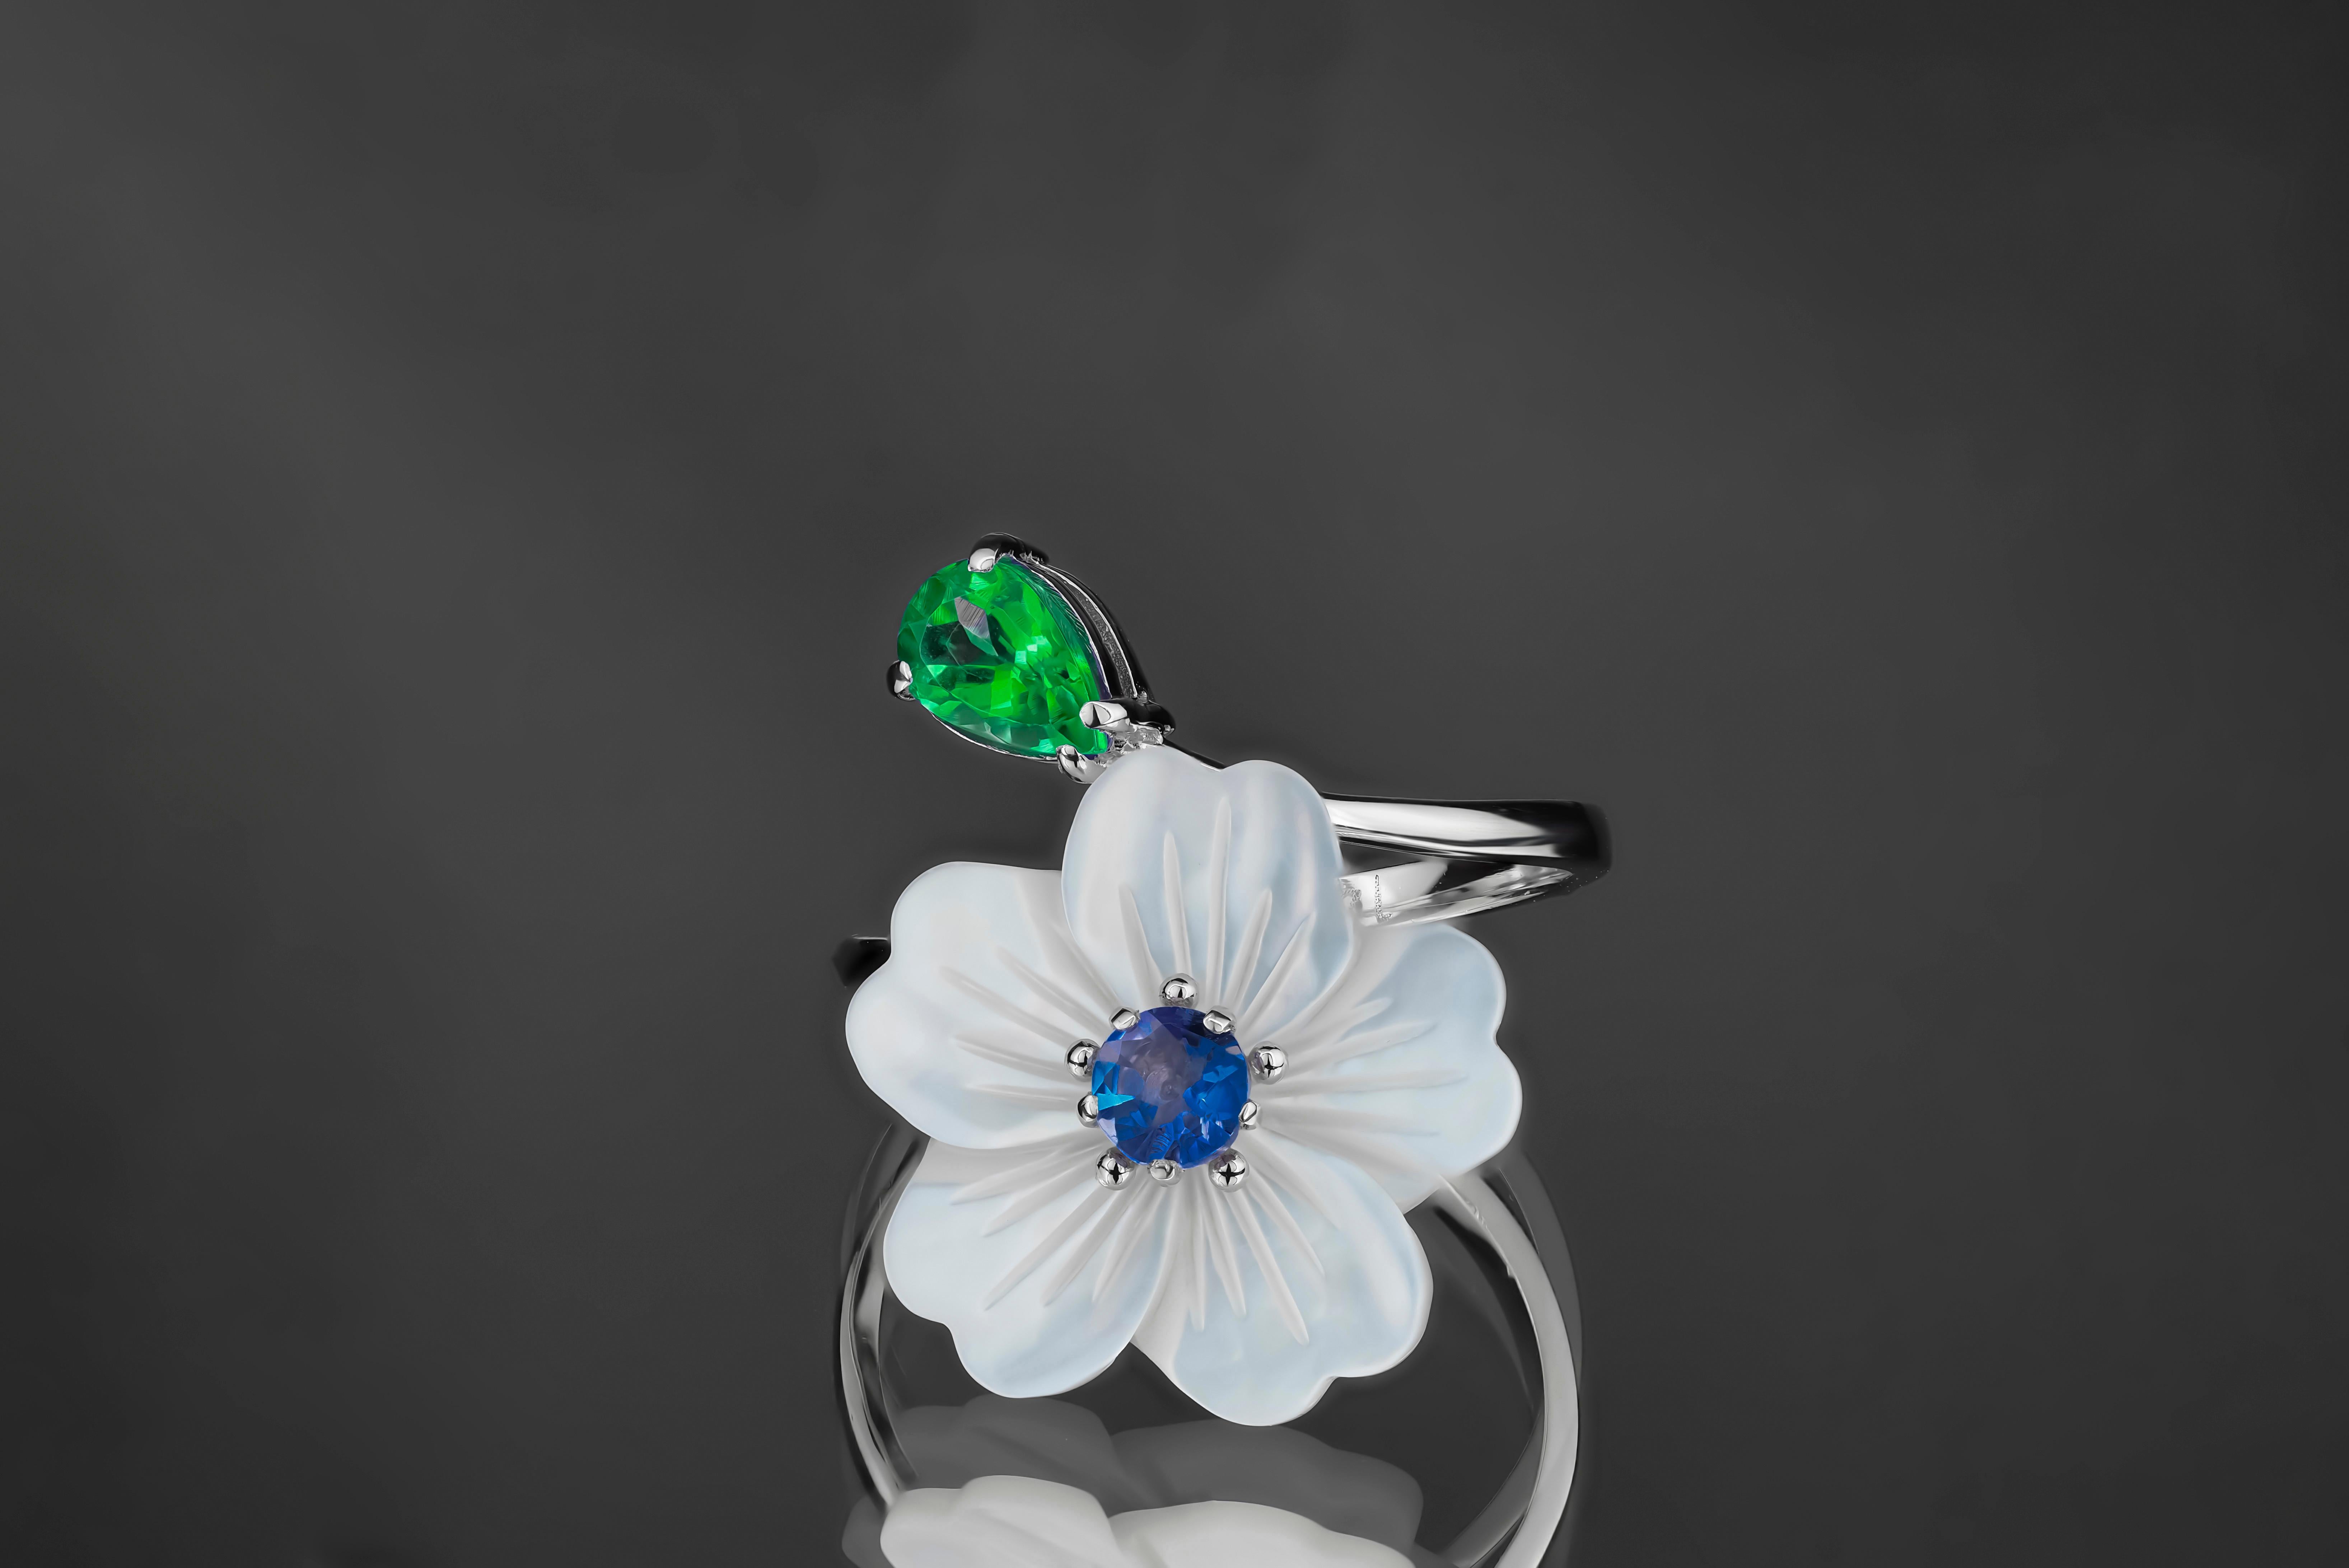 For Sale:  Carved Flower 14k ring with gemstones. 4